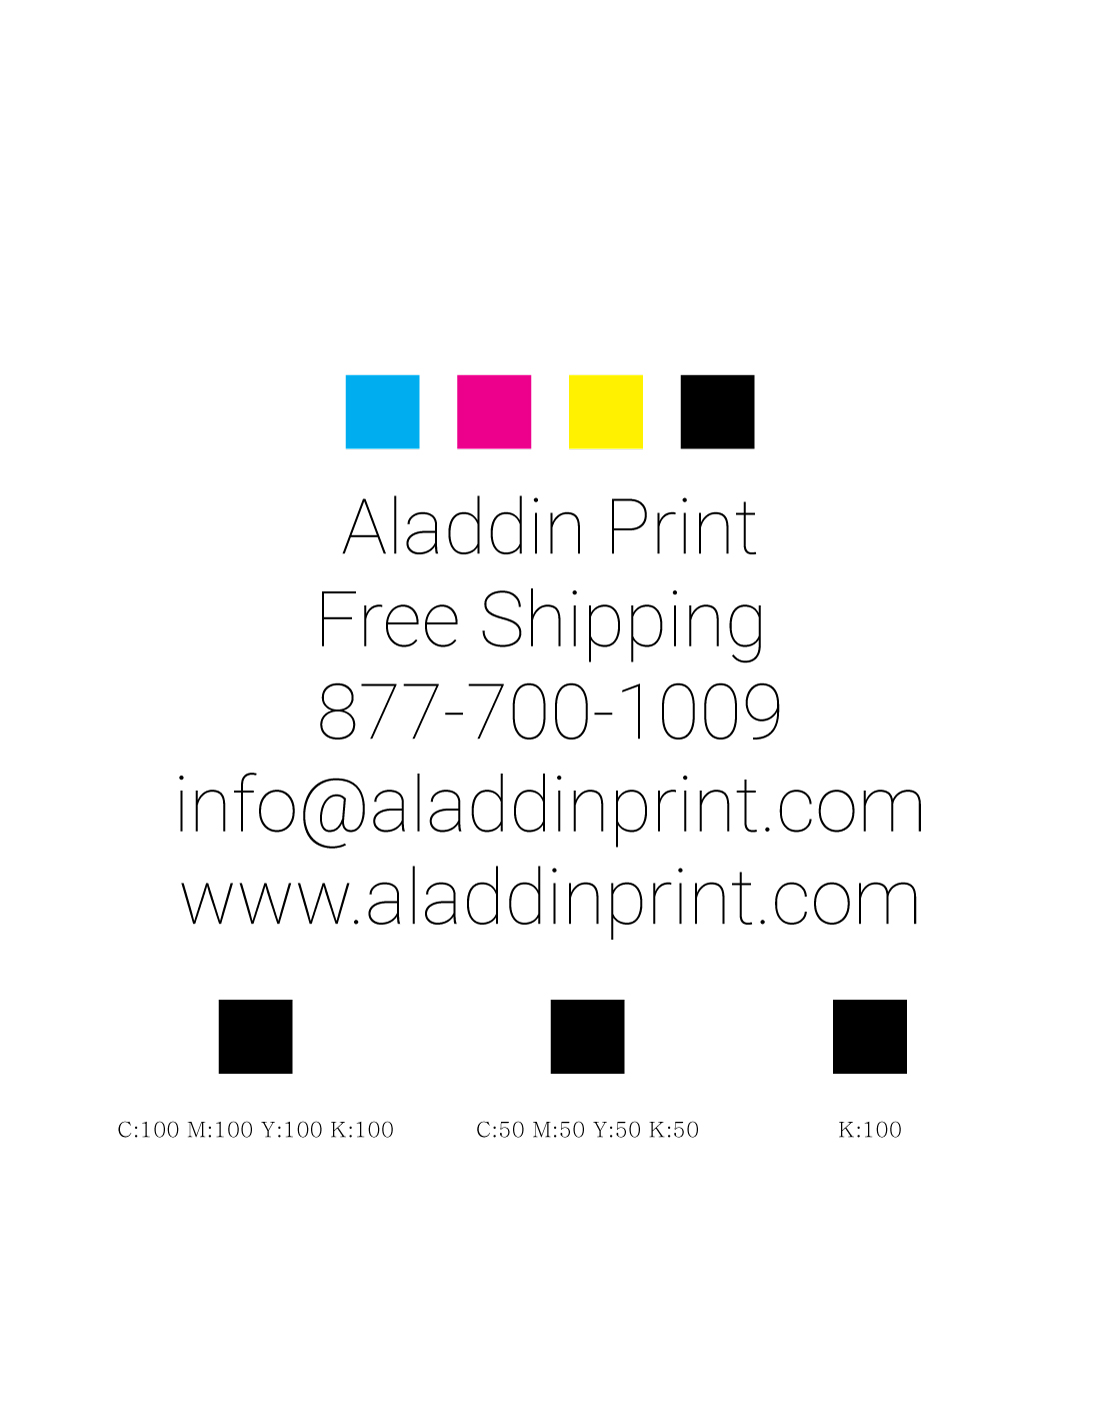 printed by Aladdin Print